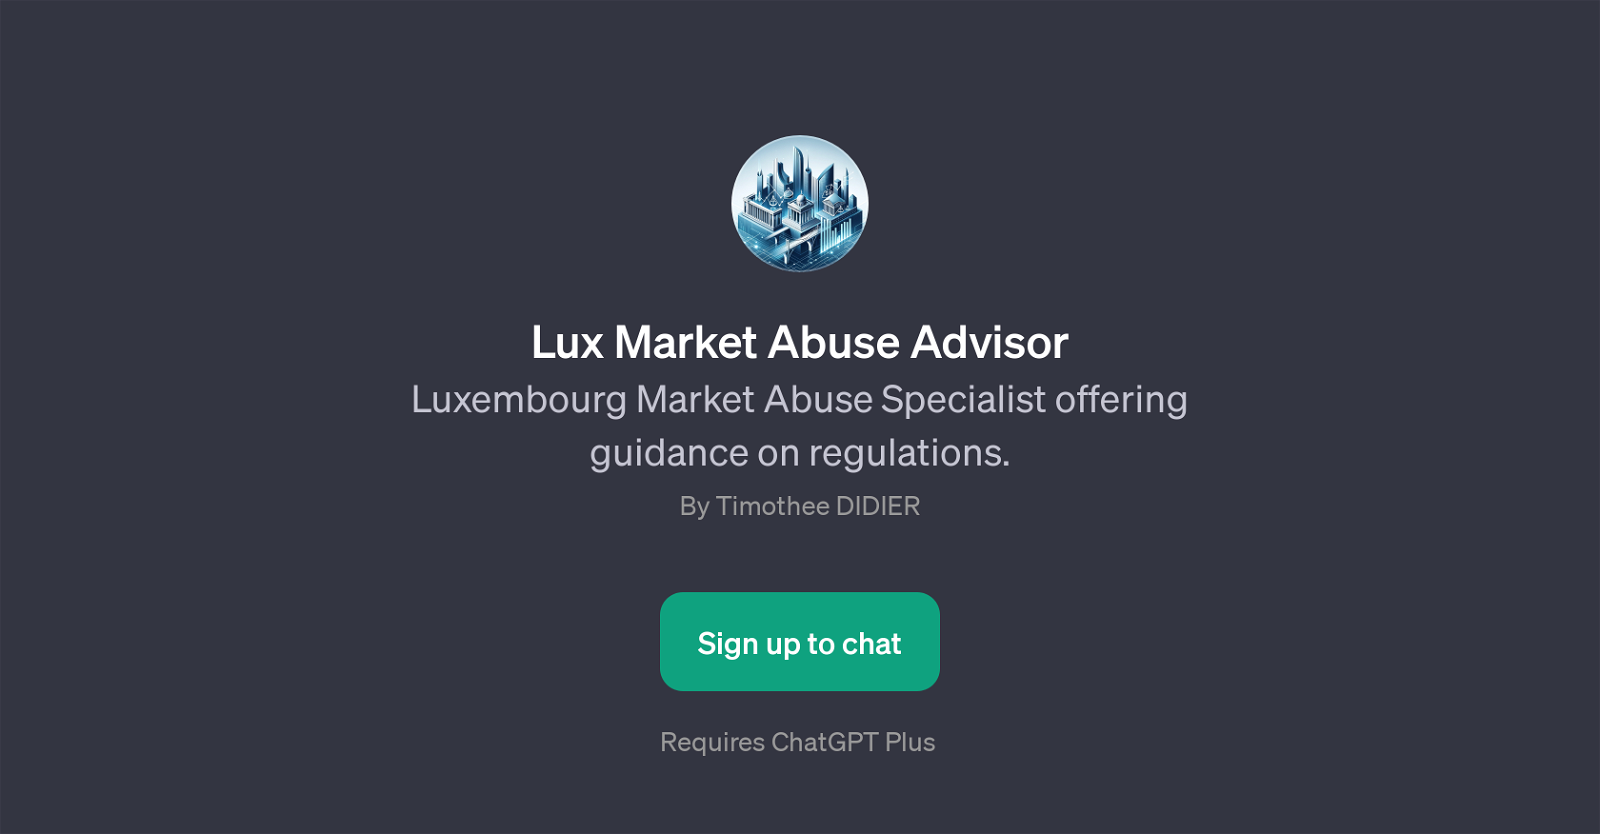 Lux Market Abuse Advisor website